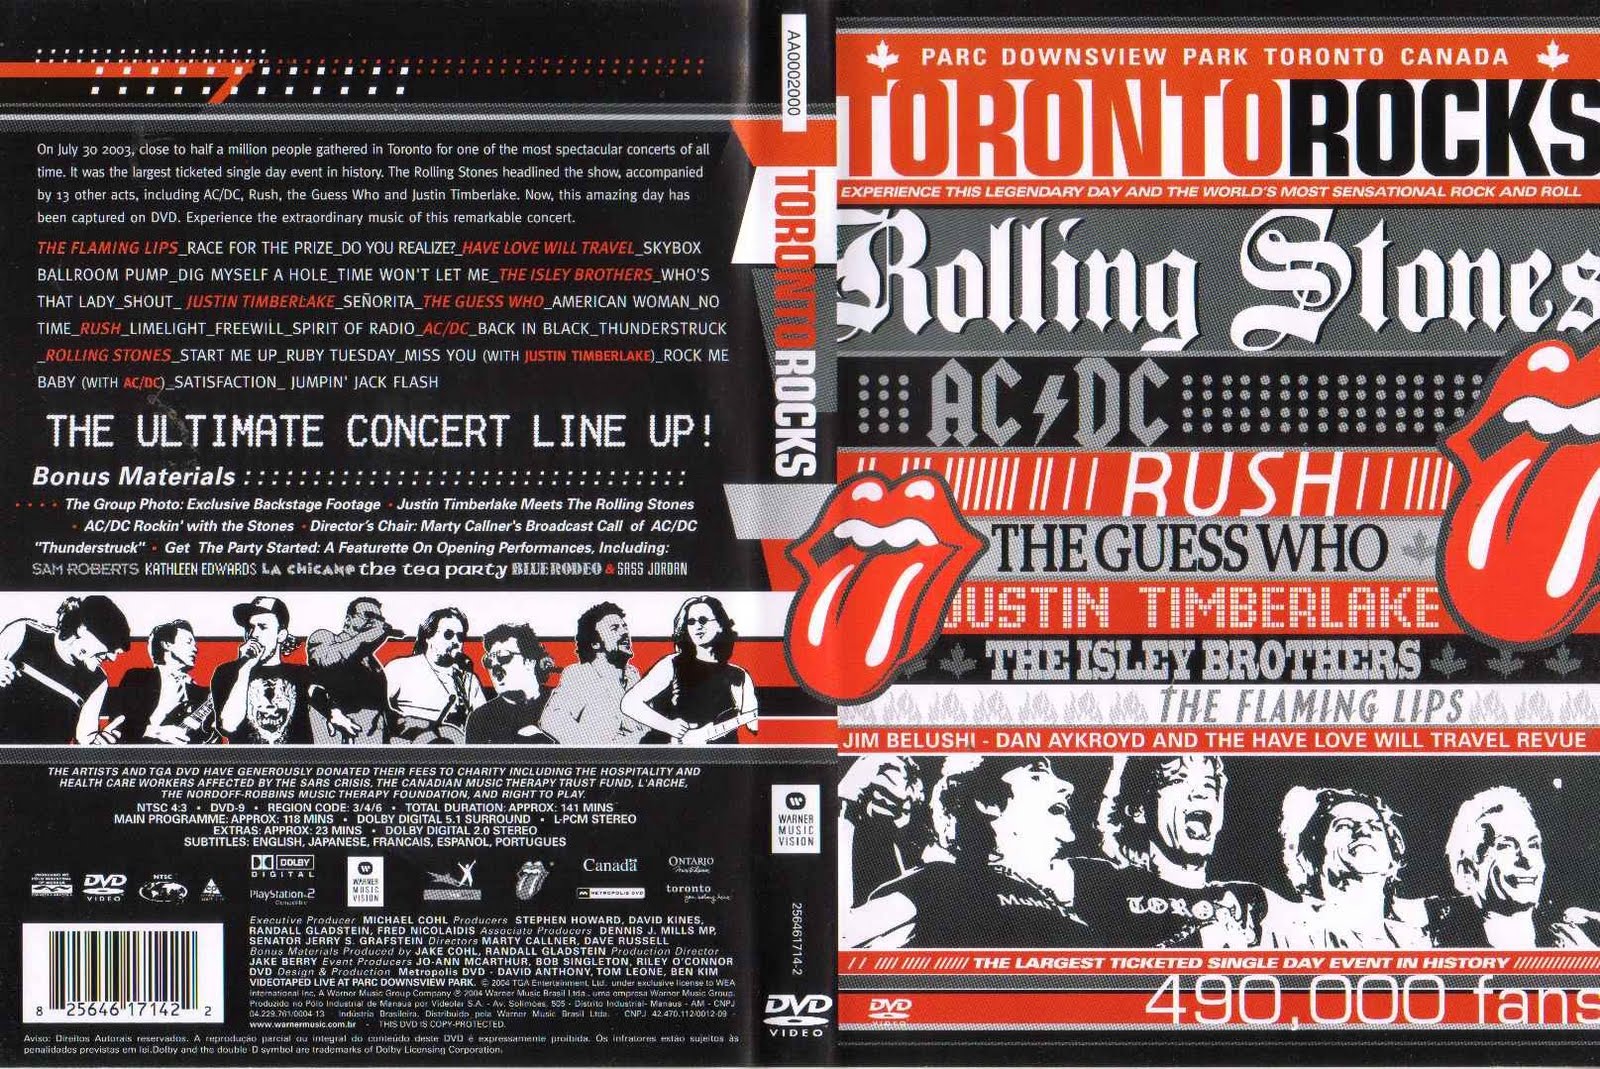 Концерт перевод на английский. Концерт (DVD). The Rolling Stones DVD. Rolling Stones u2 Queen DVD. The Rolling Stones Дворцовая площадь афиша.